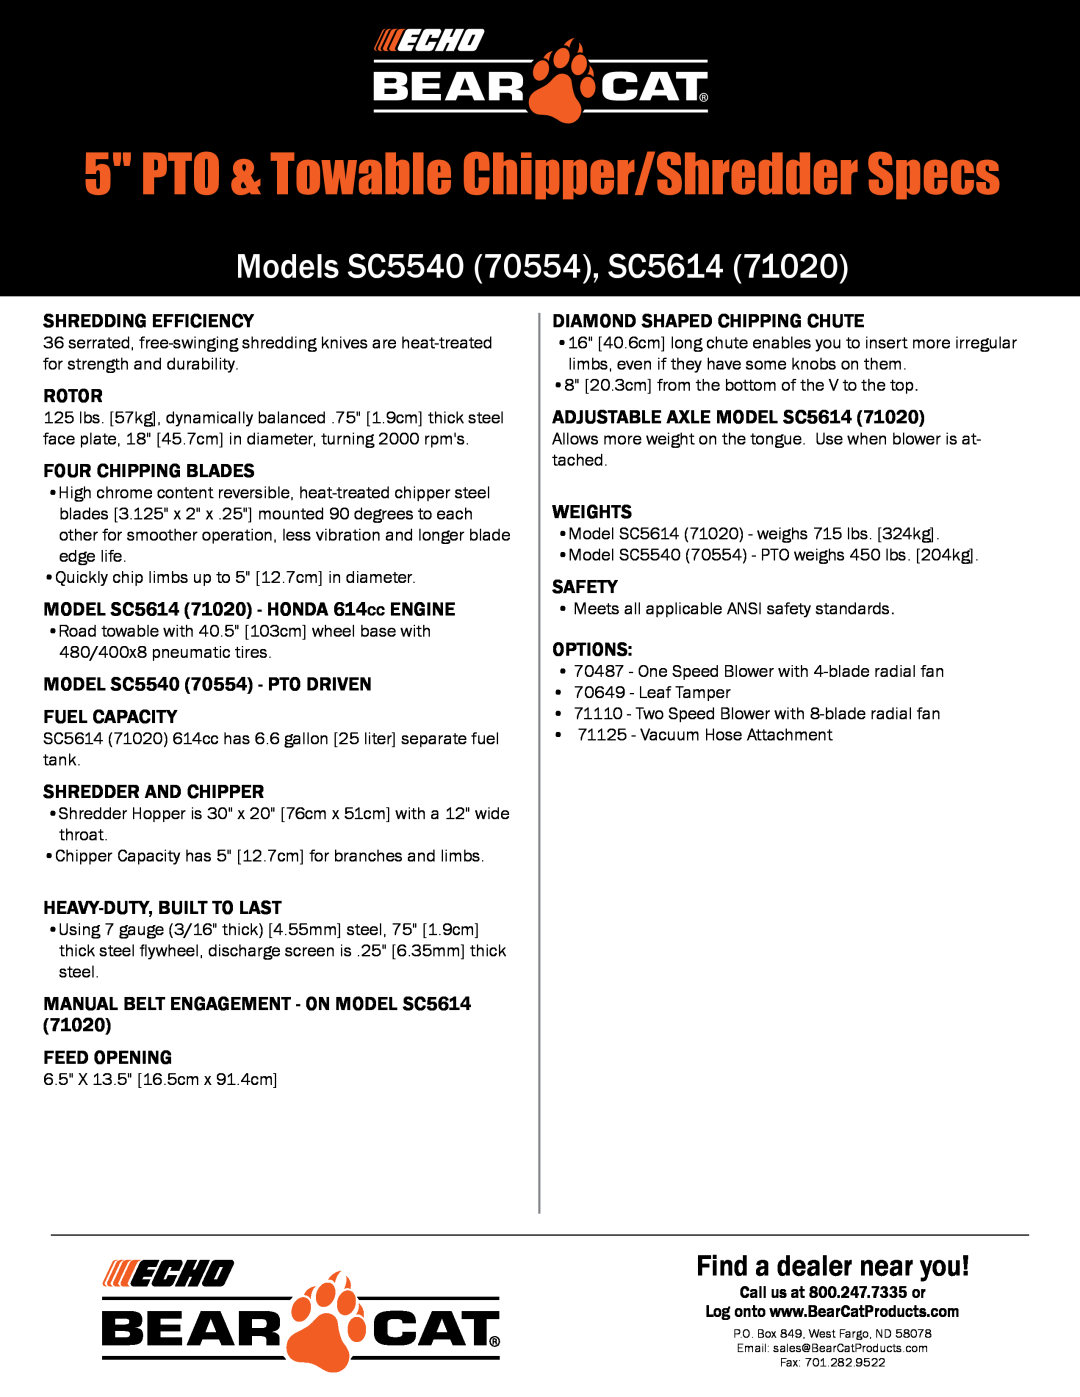 Echo Bear Cat 71110, 71125 manual PTO & Towable Chipper/Shredder Specs, Models SC5540 70554, SC5614, Find a dealer near you 